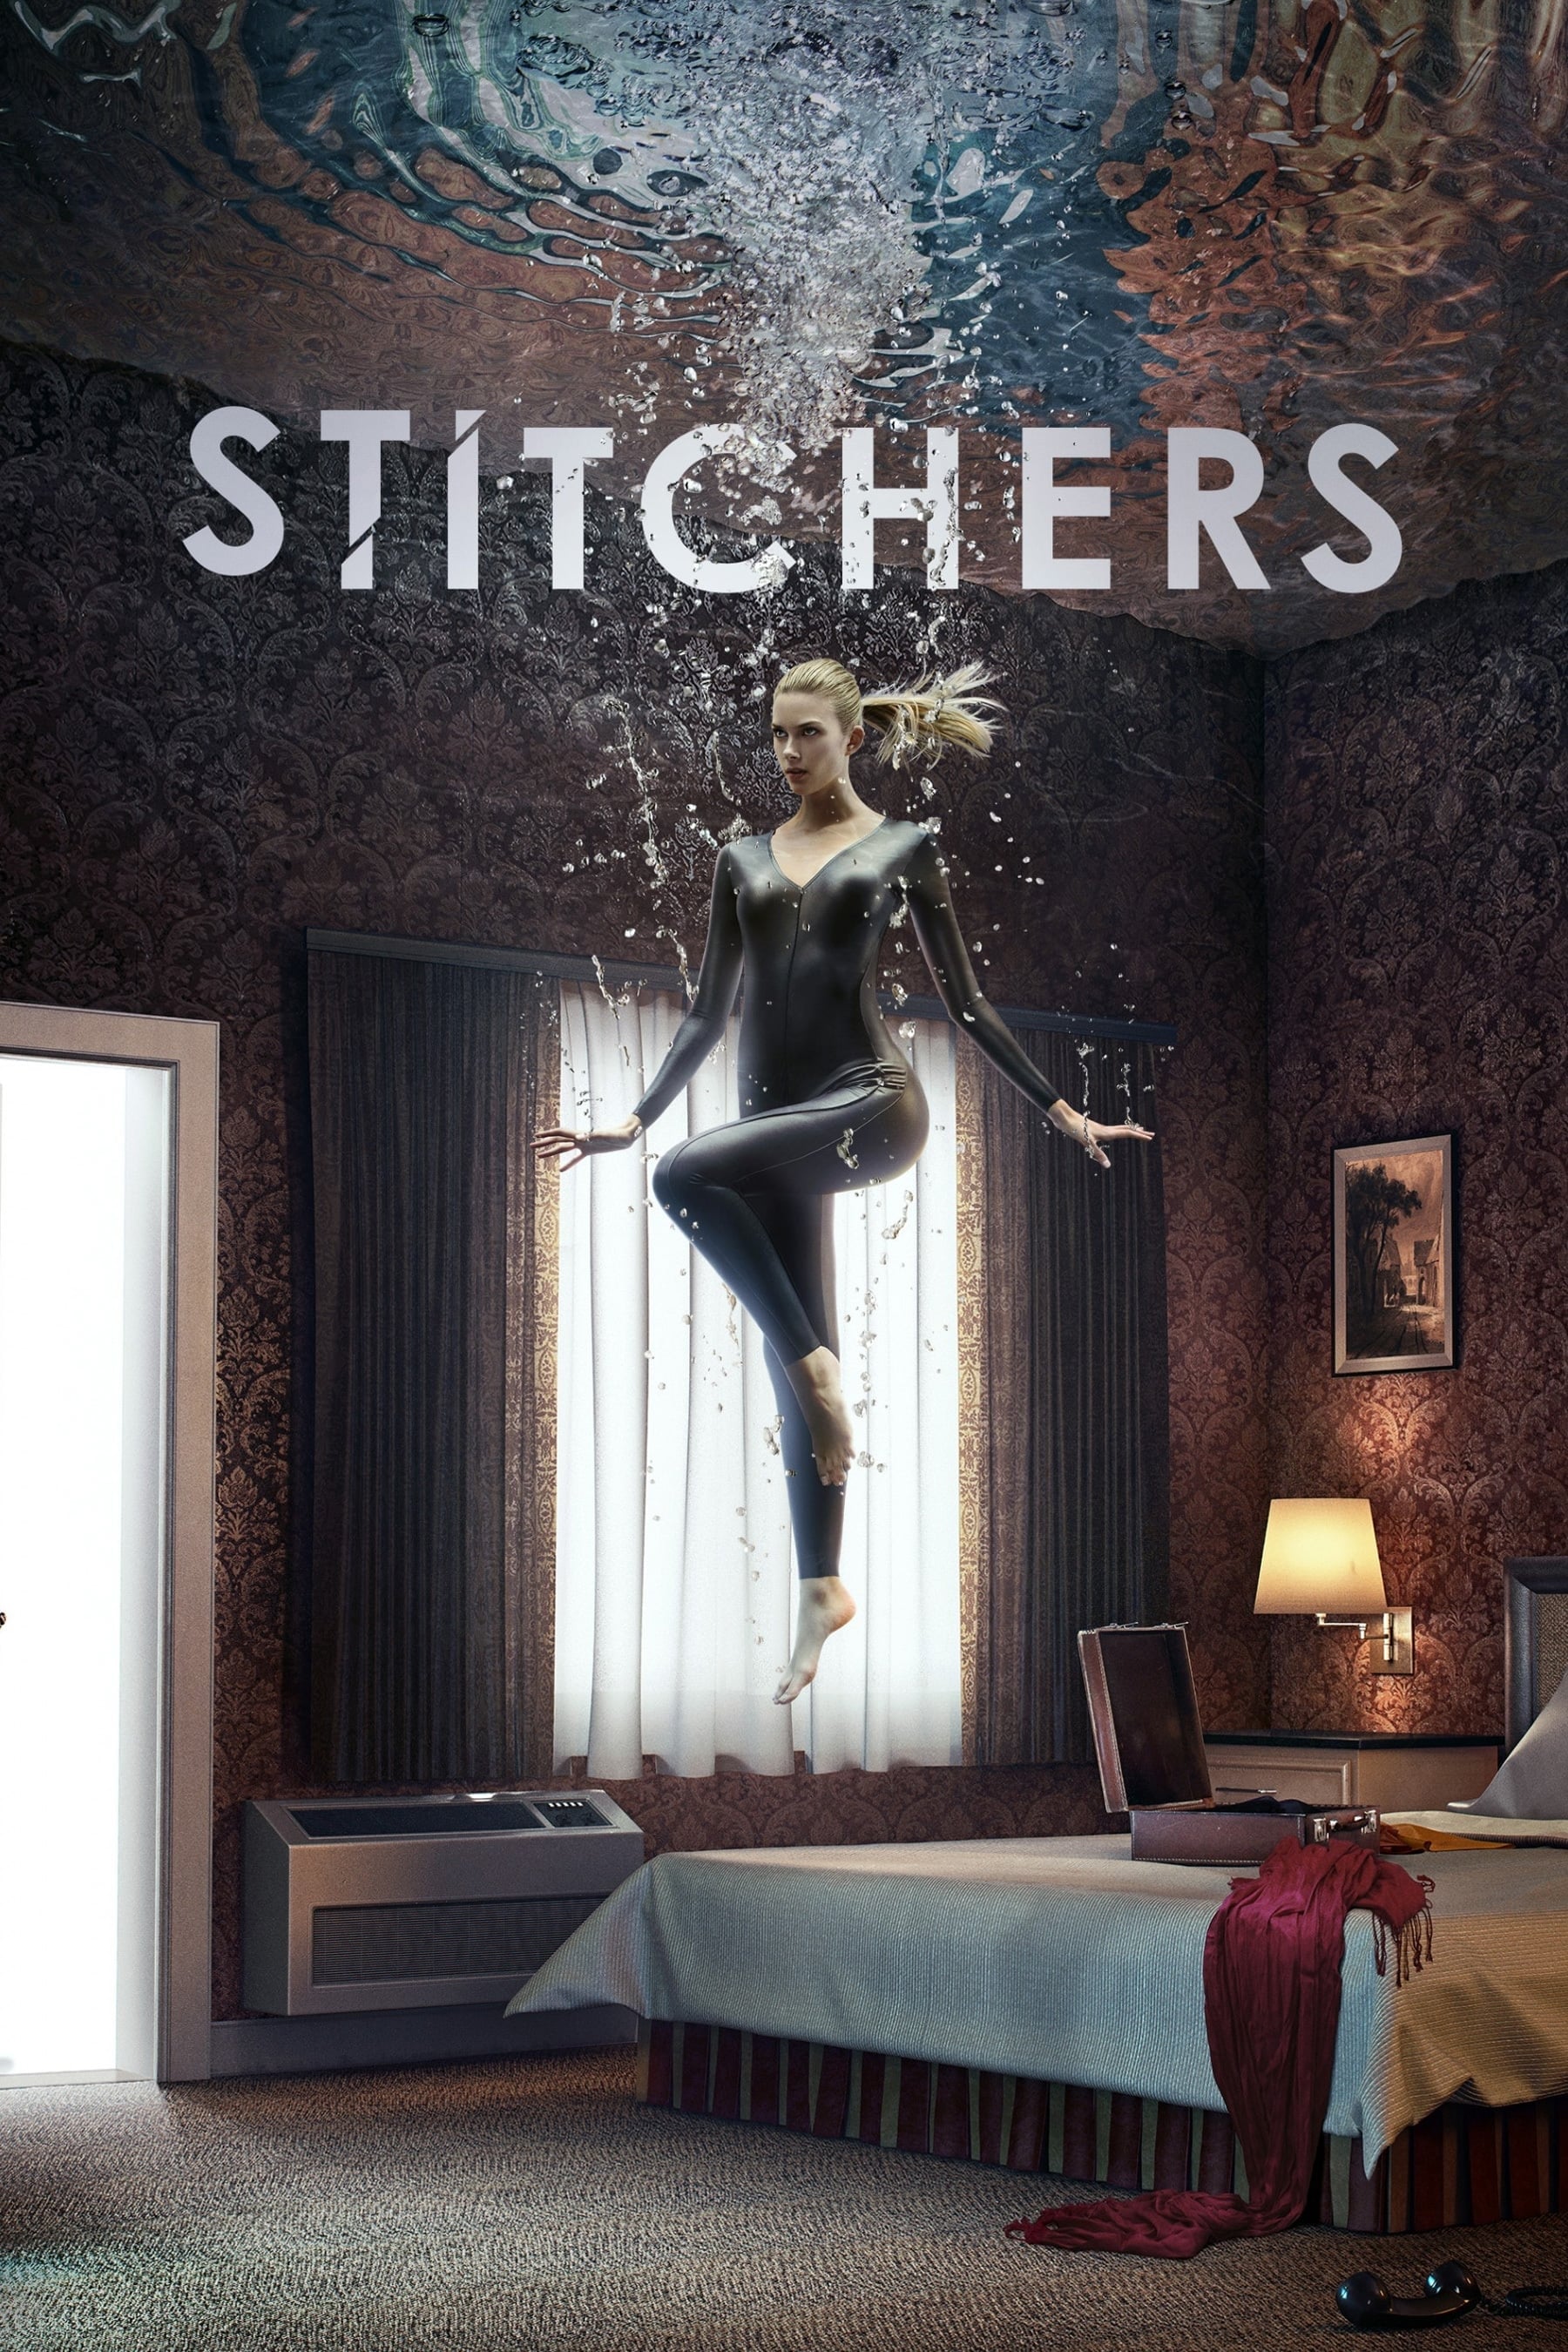 Stitchers TV Shows About Scientist